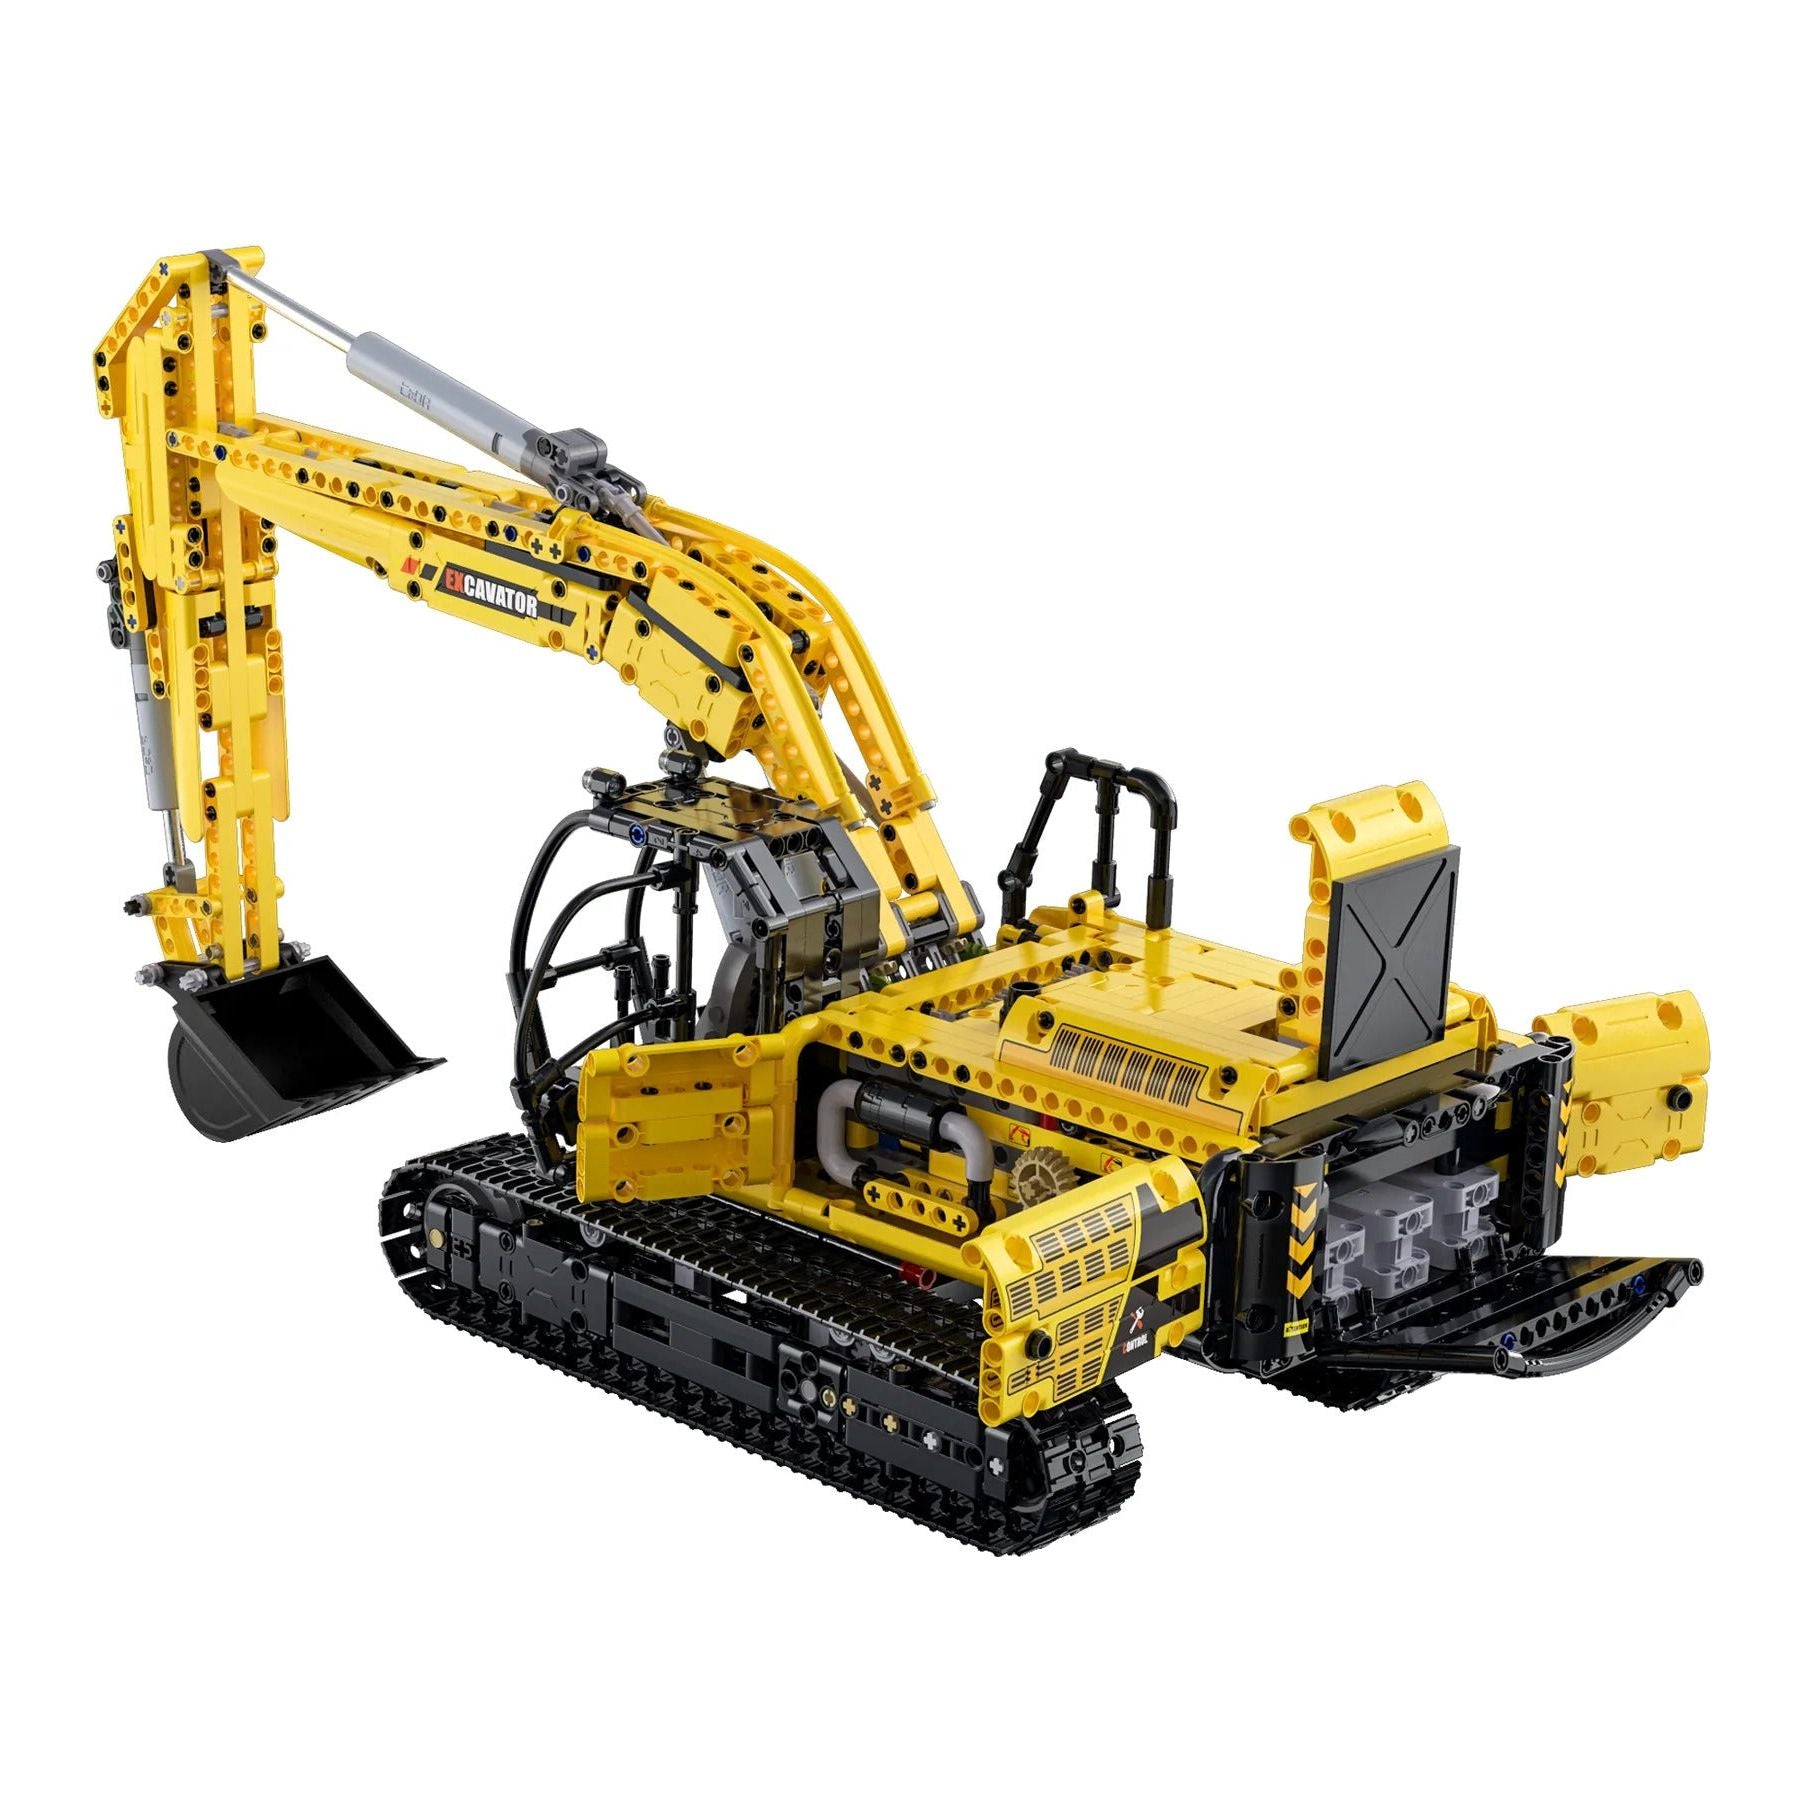 CaDA Full Function Excavator Construction Series (Non-Motorized) Brick Building Set 1,702 Pieces